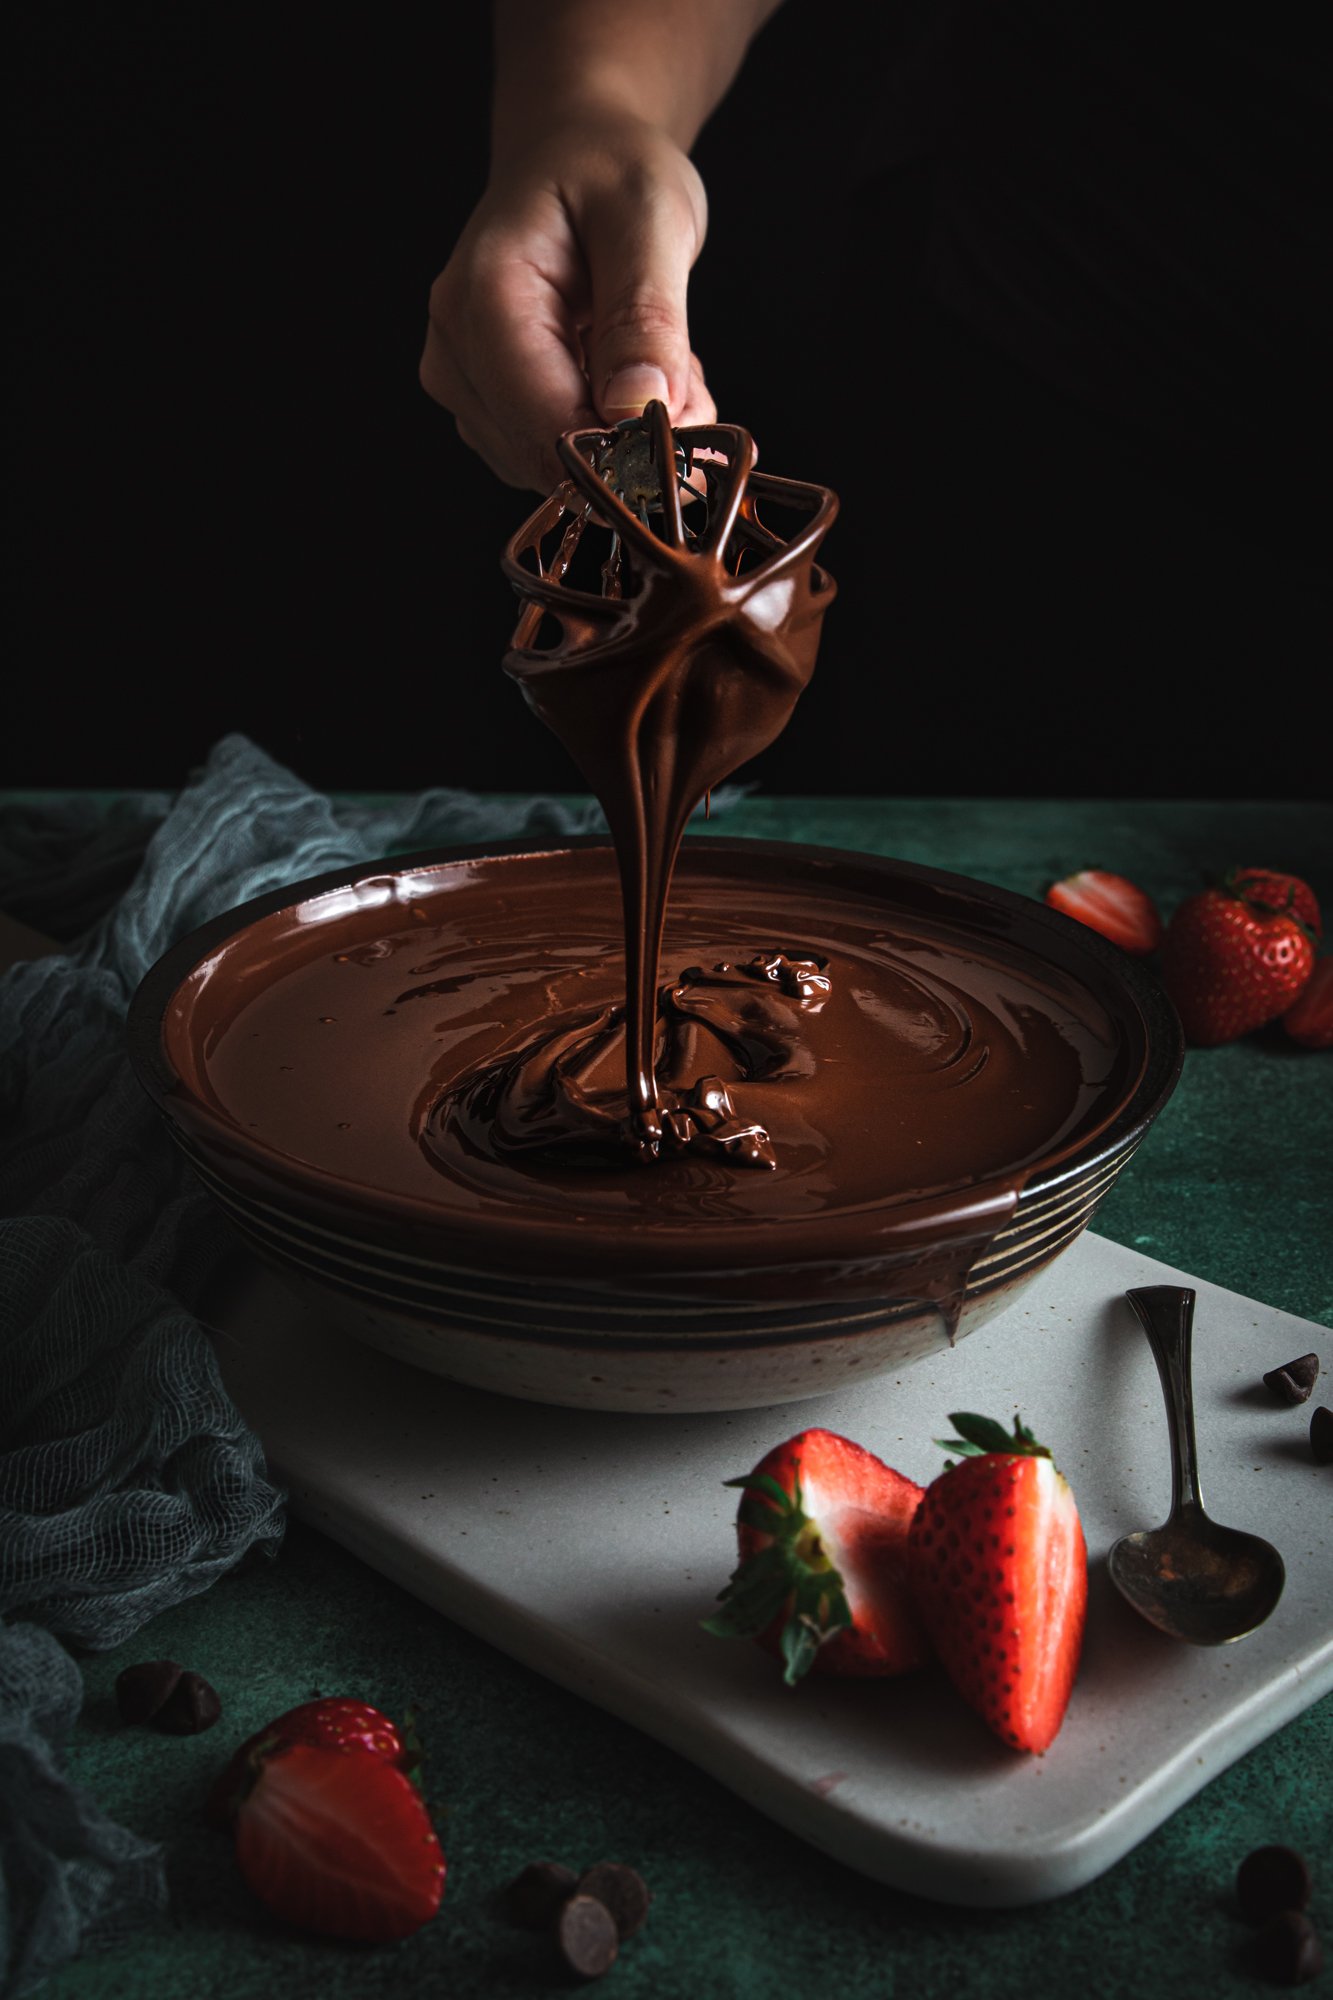 Chocolate Covered Strawberries by Leigh Skomal008.jpg